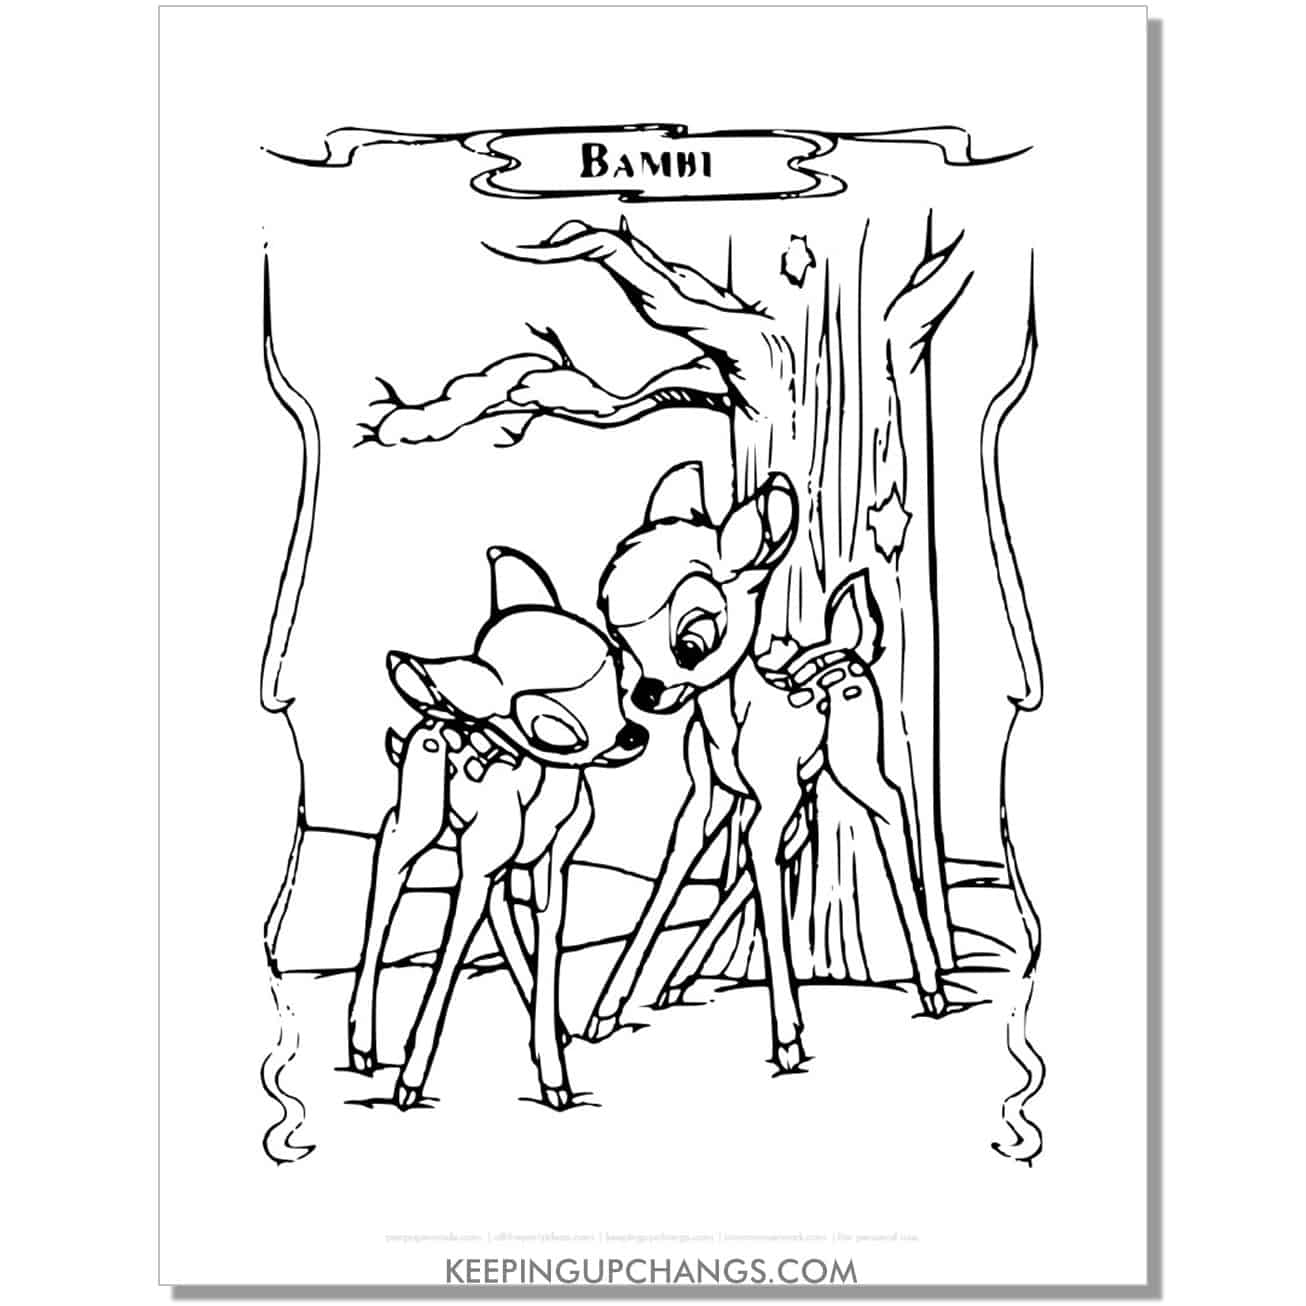 free faline and bambi coloring page, sheet.